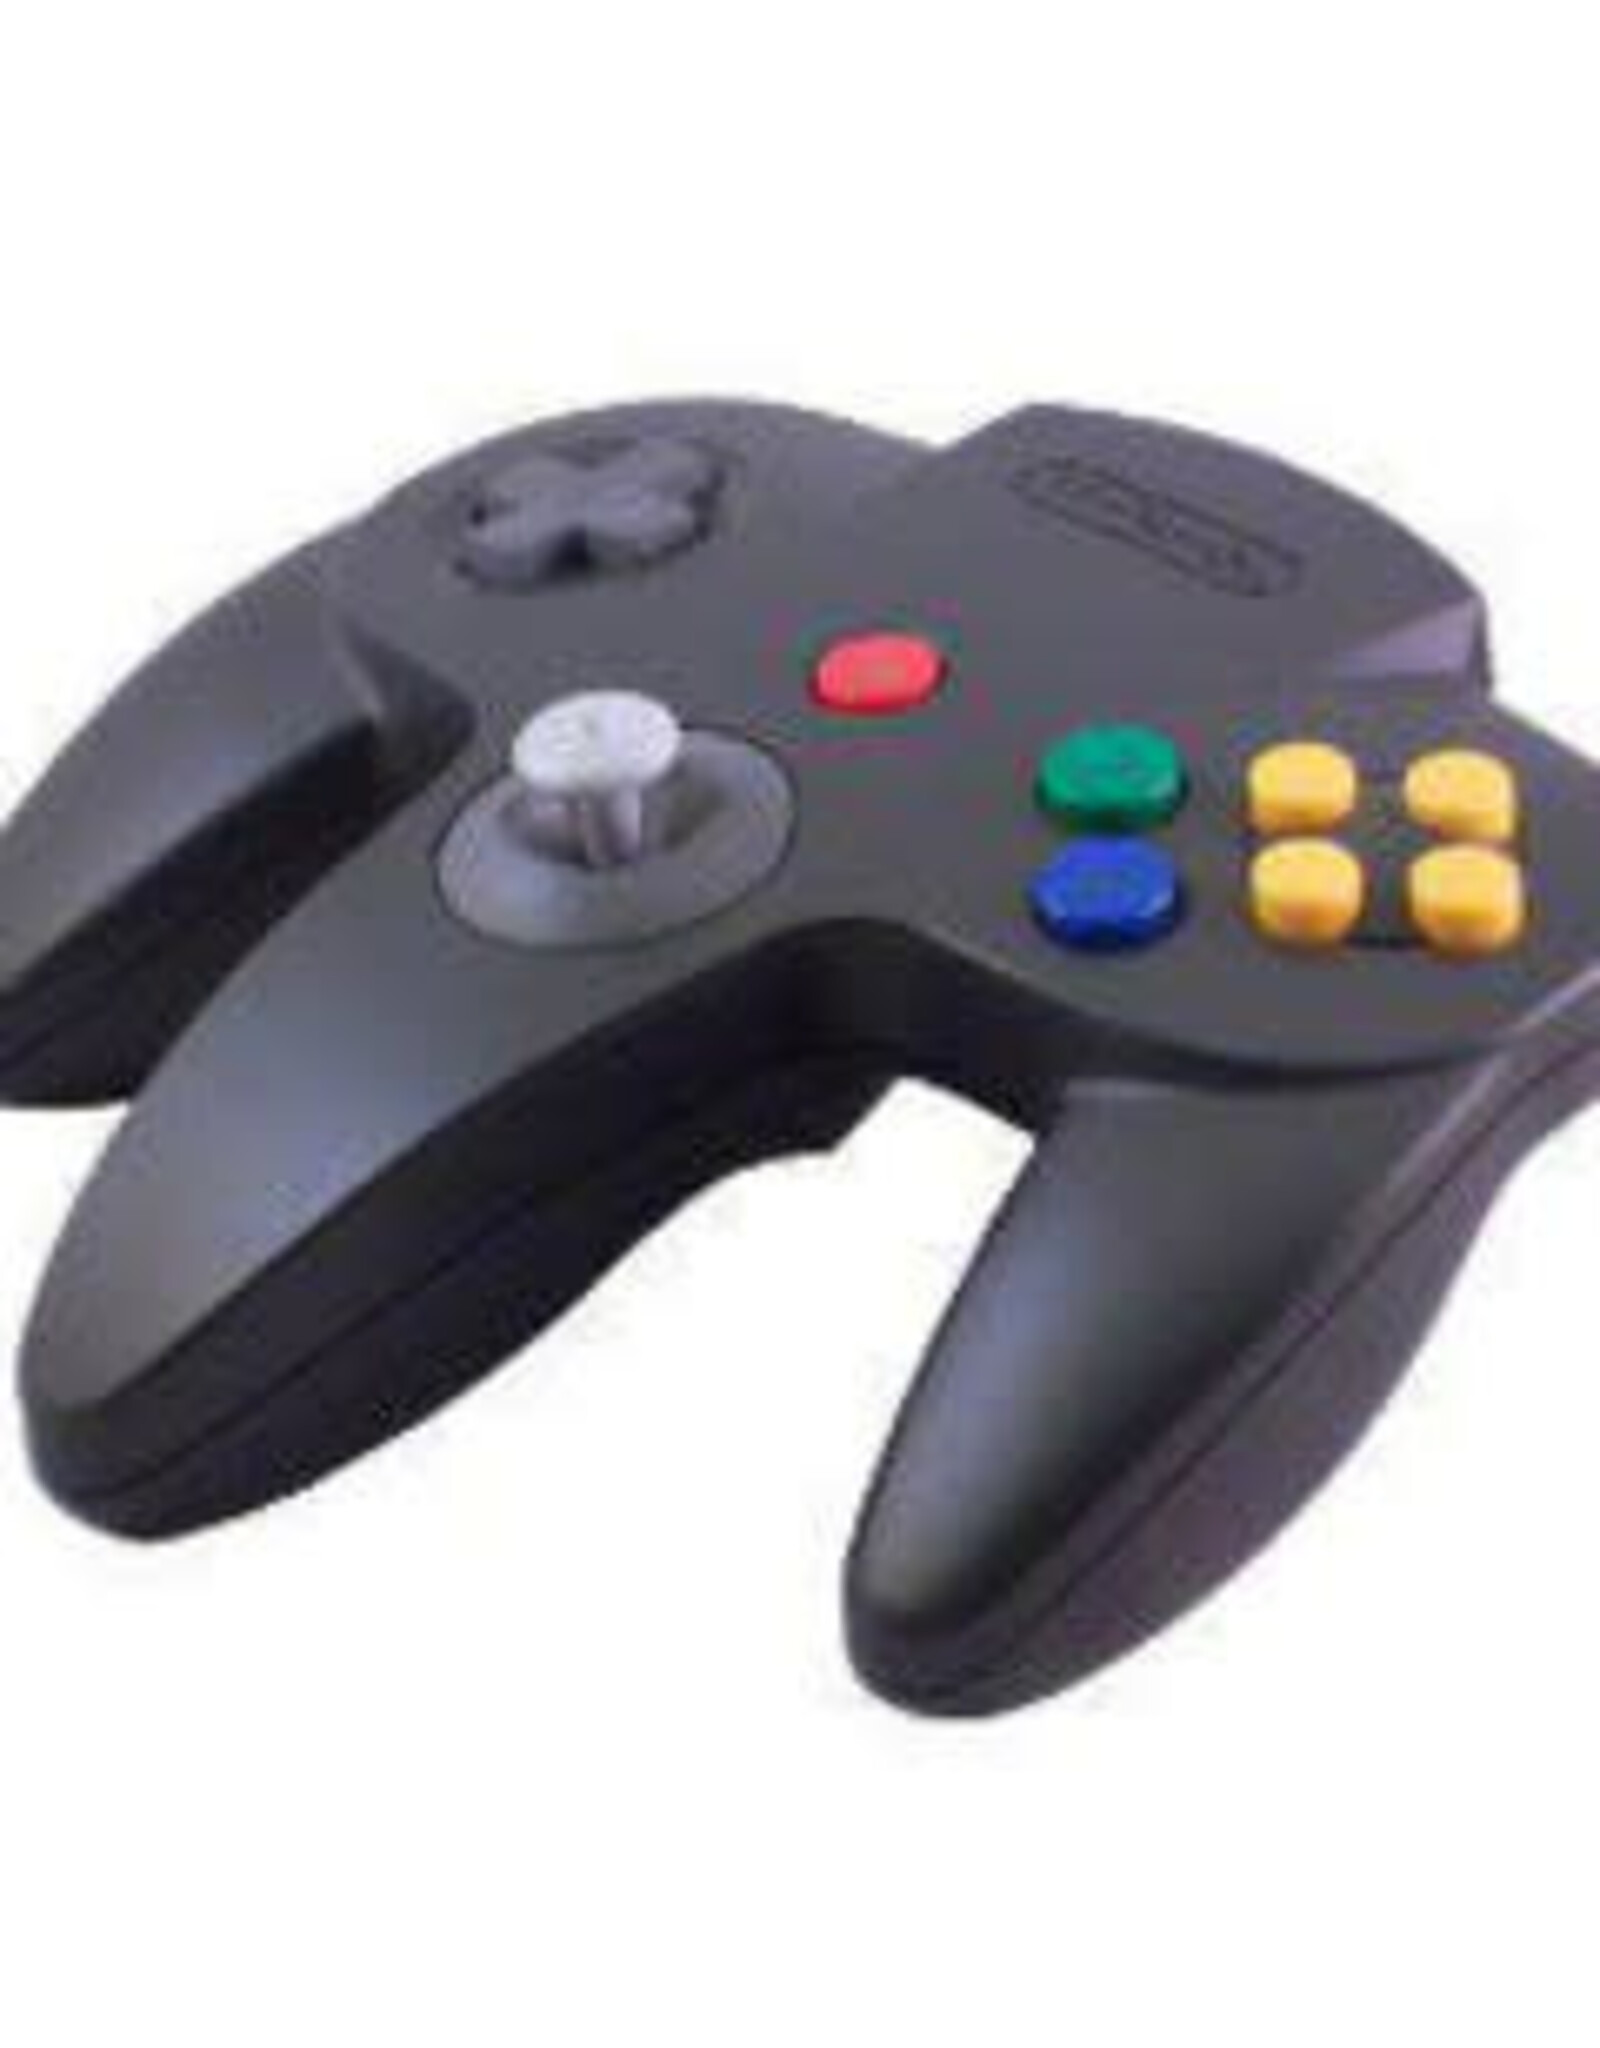 Nintendo 64 Nintendo 64 N64 Controller - Black with New Joystick (Used, Cosmetic Damage)